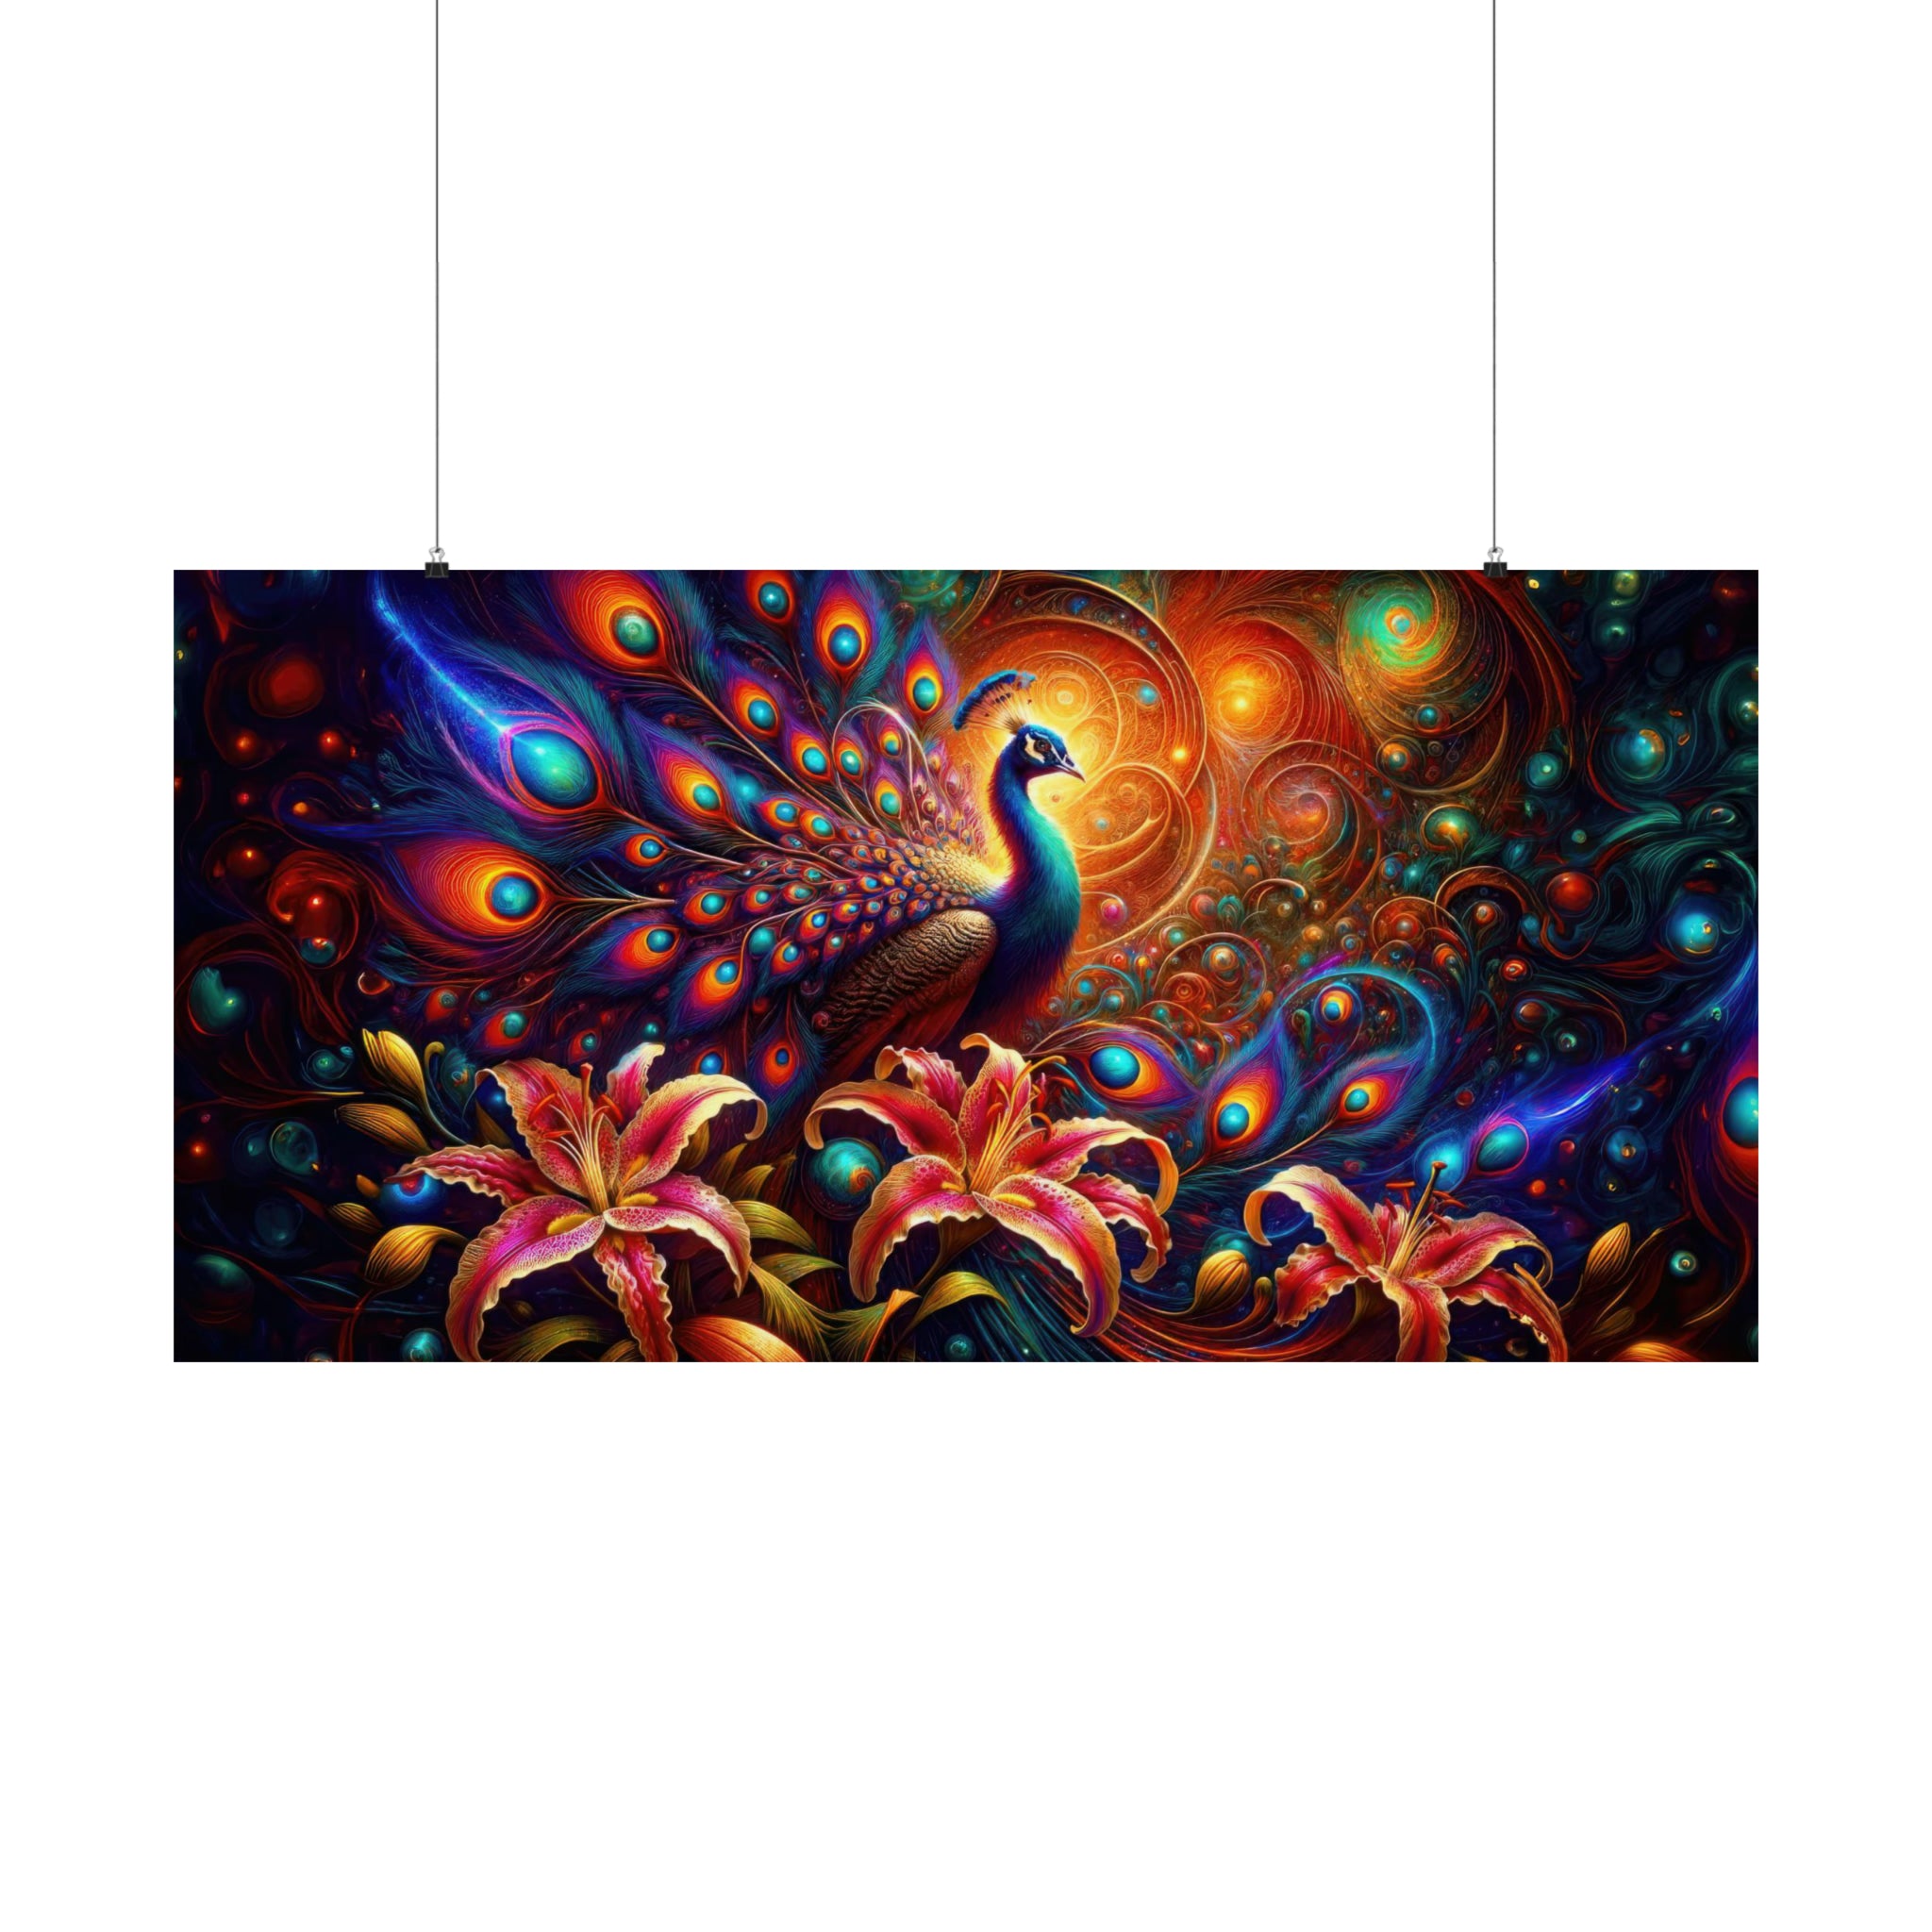 Peacock Galaxy Gala Poster